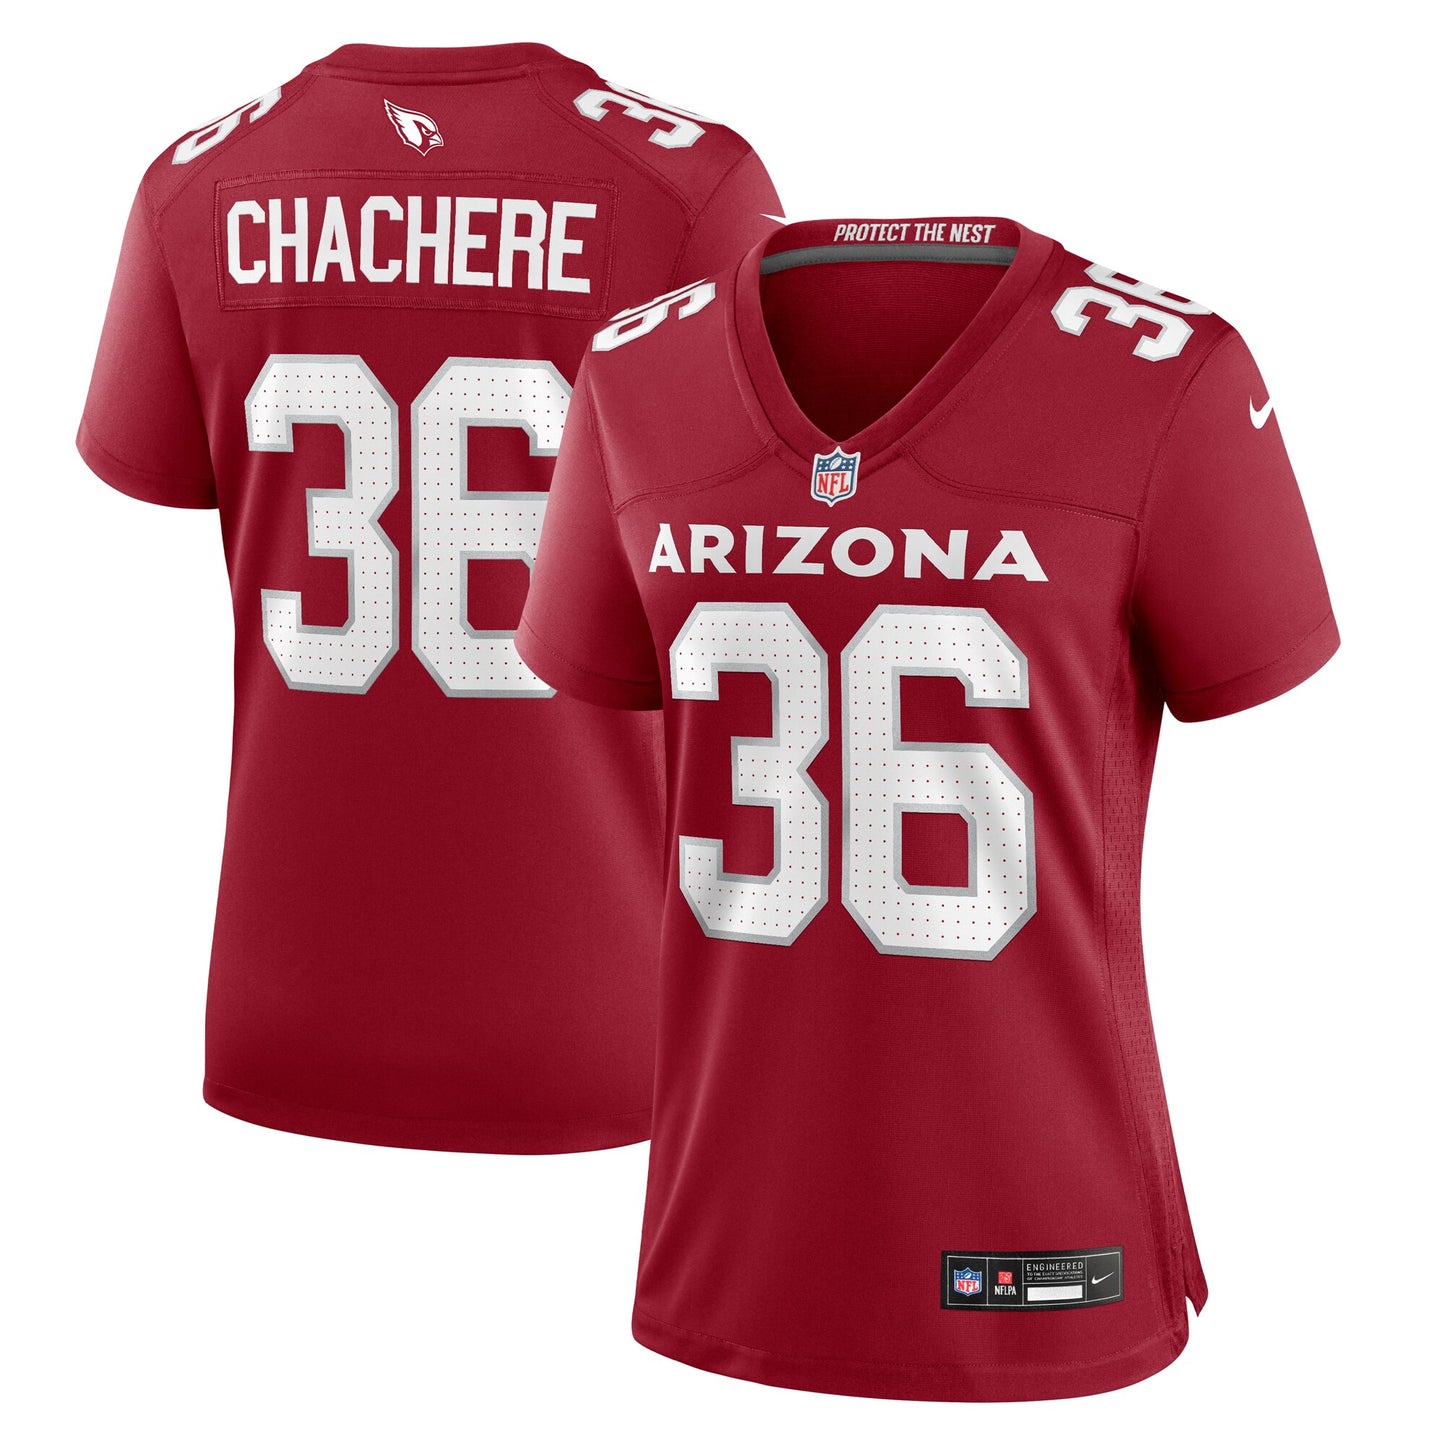 Andre Chachere Arizona Cardinals Nike Women's Team Game Jersey - Cardinal